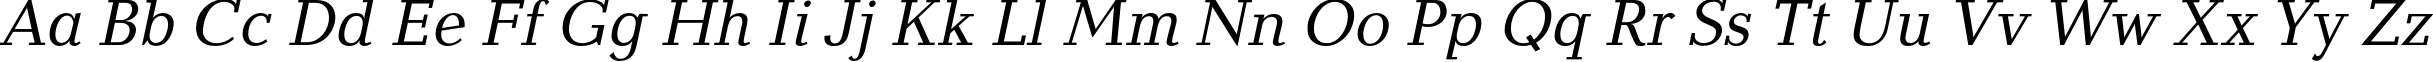 Пример написания английского алфавита шрифтом BalticaC Italic